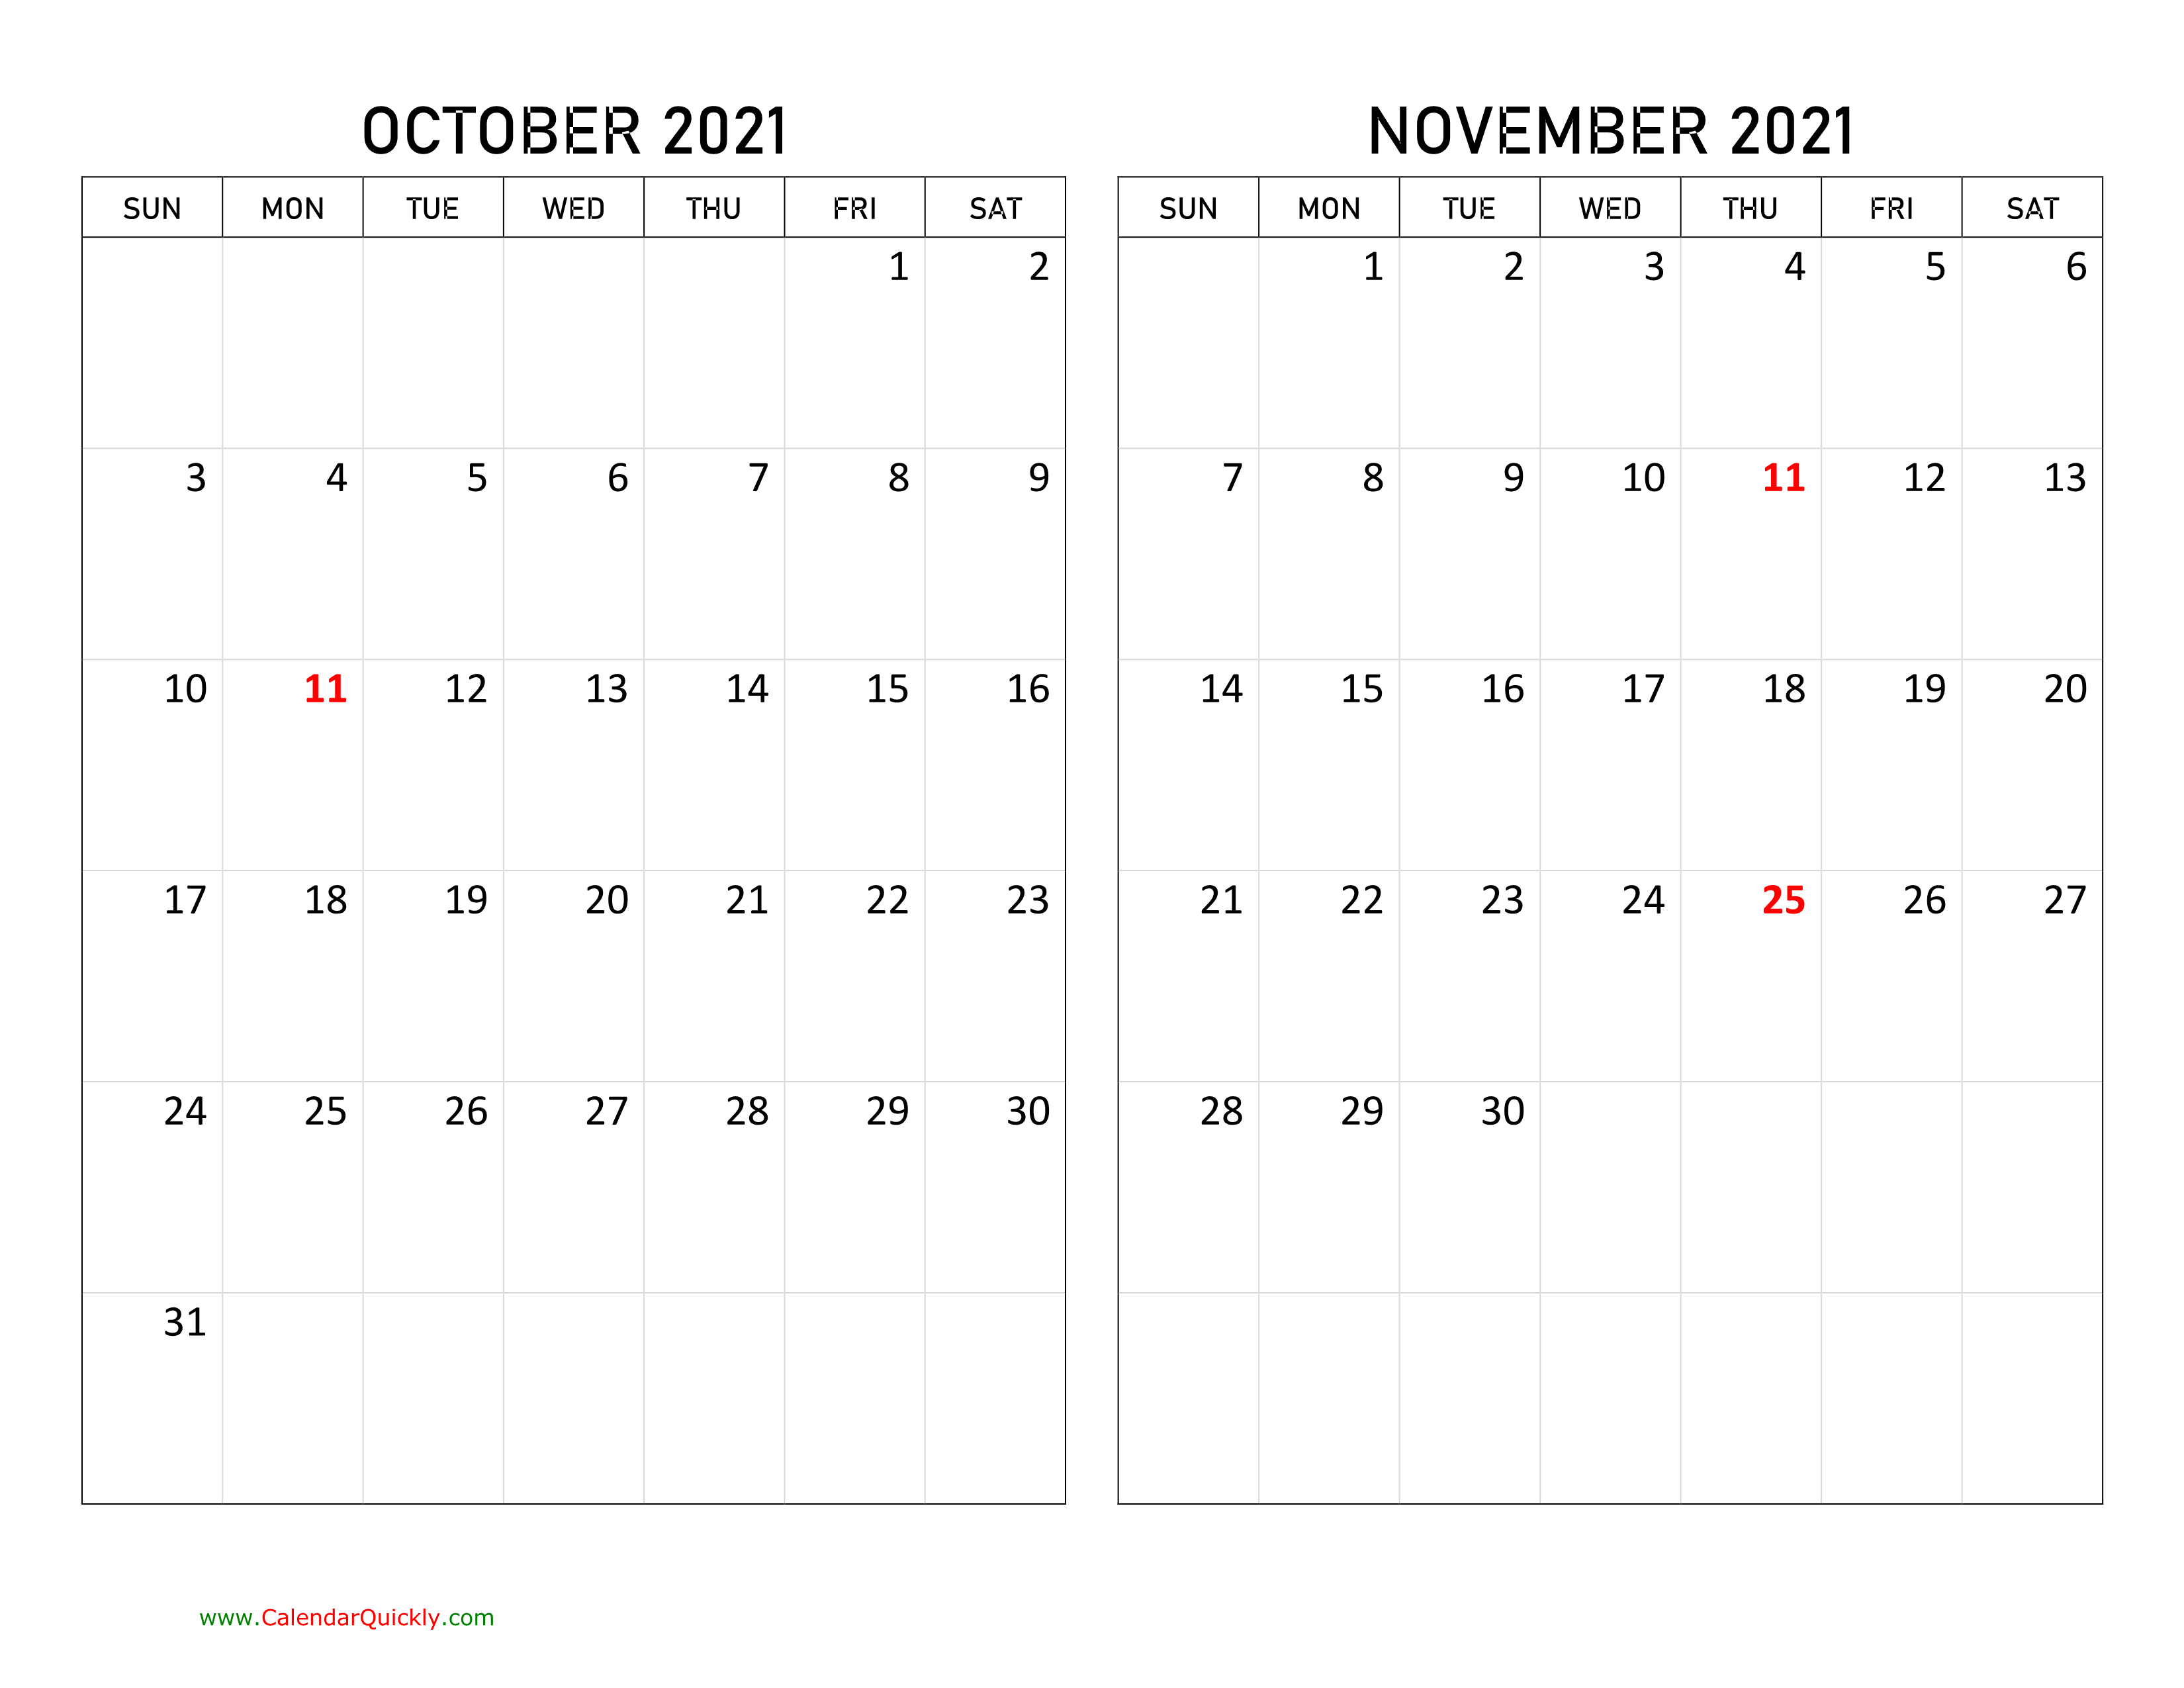 October and November 2021 Calendar Calendar Quickly